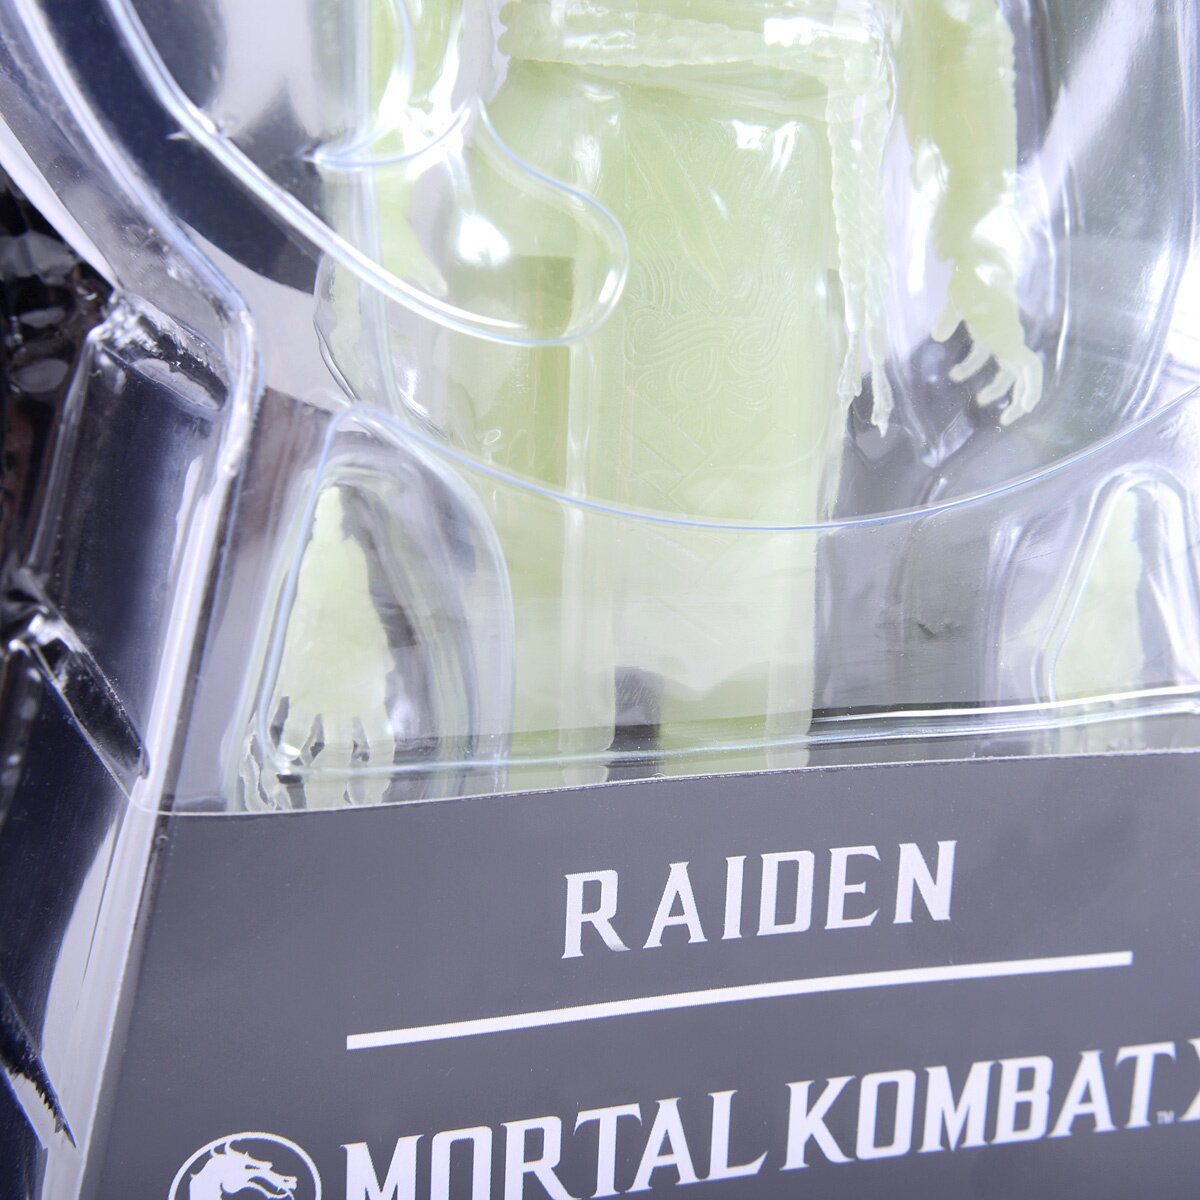 Mortal Kombat XL (Xbox One) - Tokyo Otaku Mode (TOM)